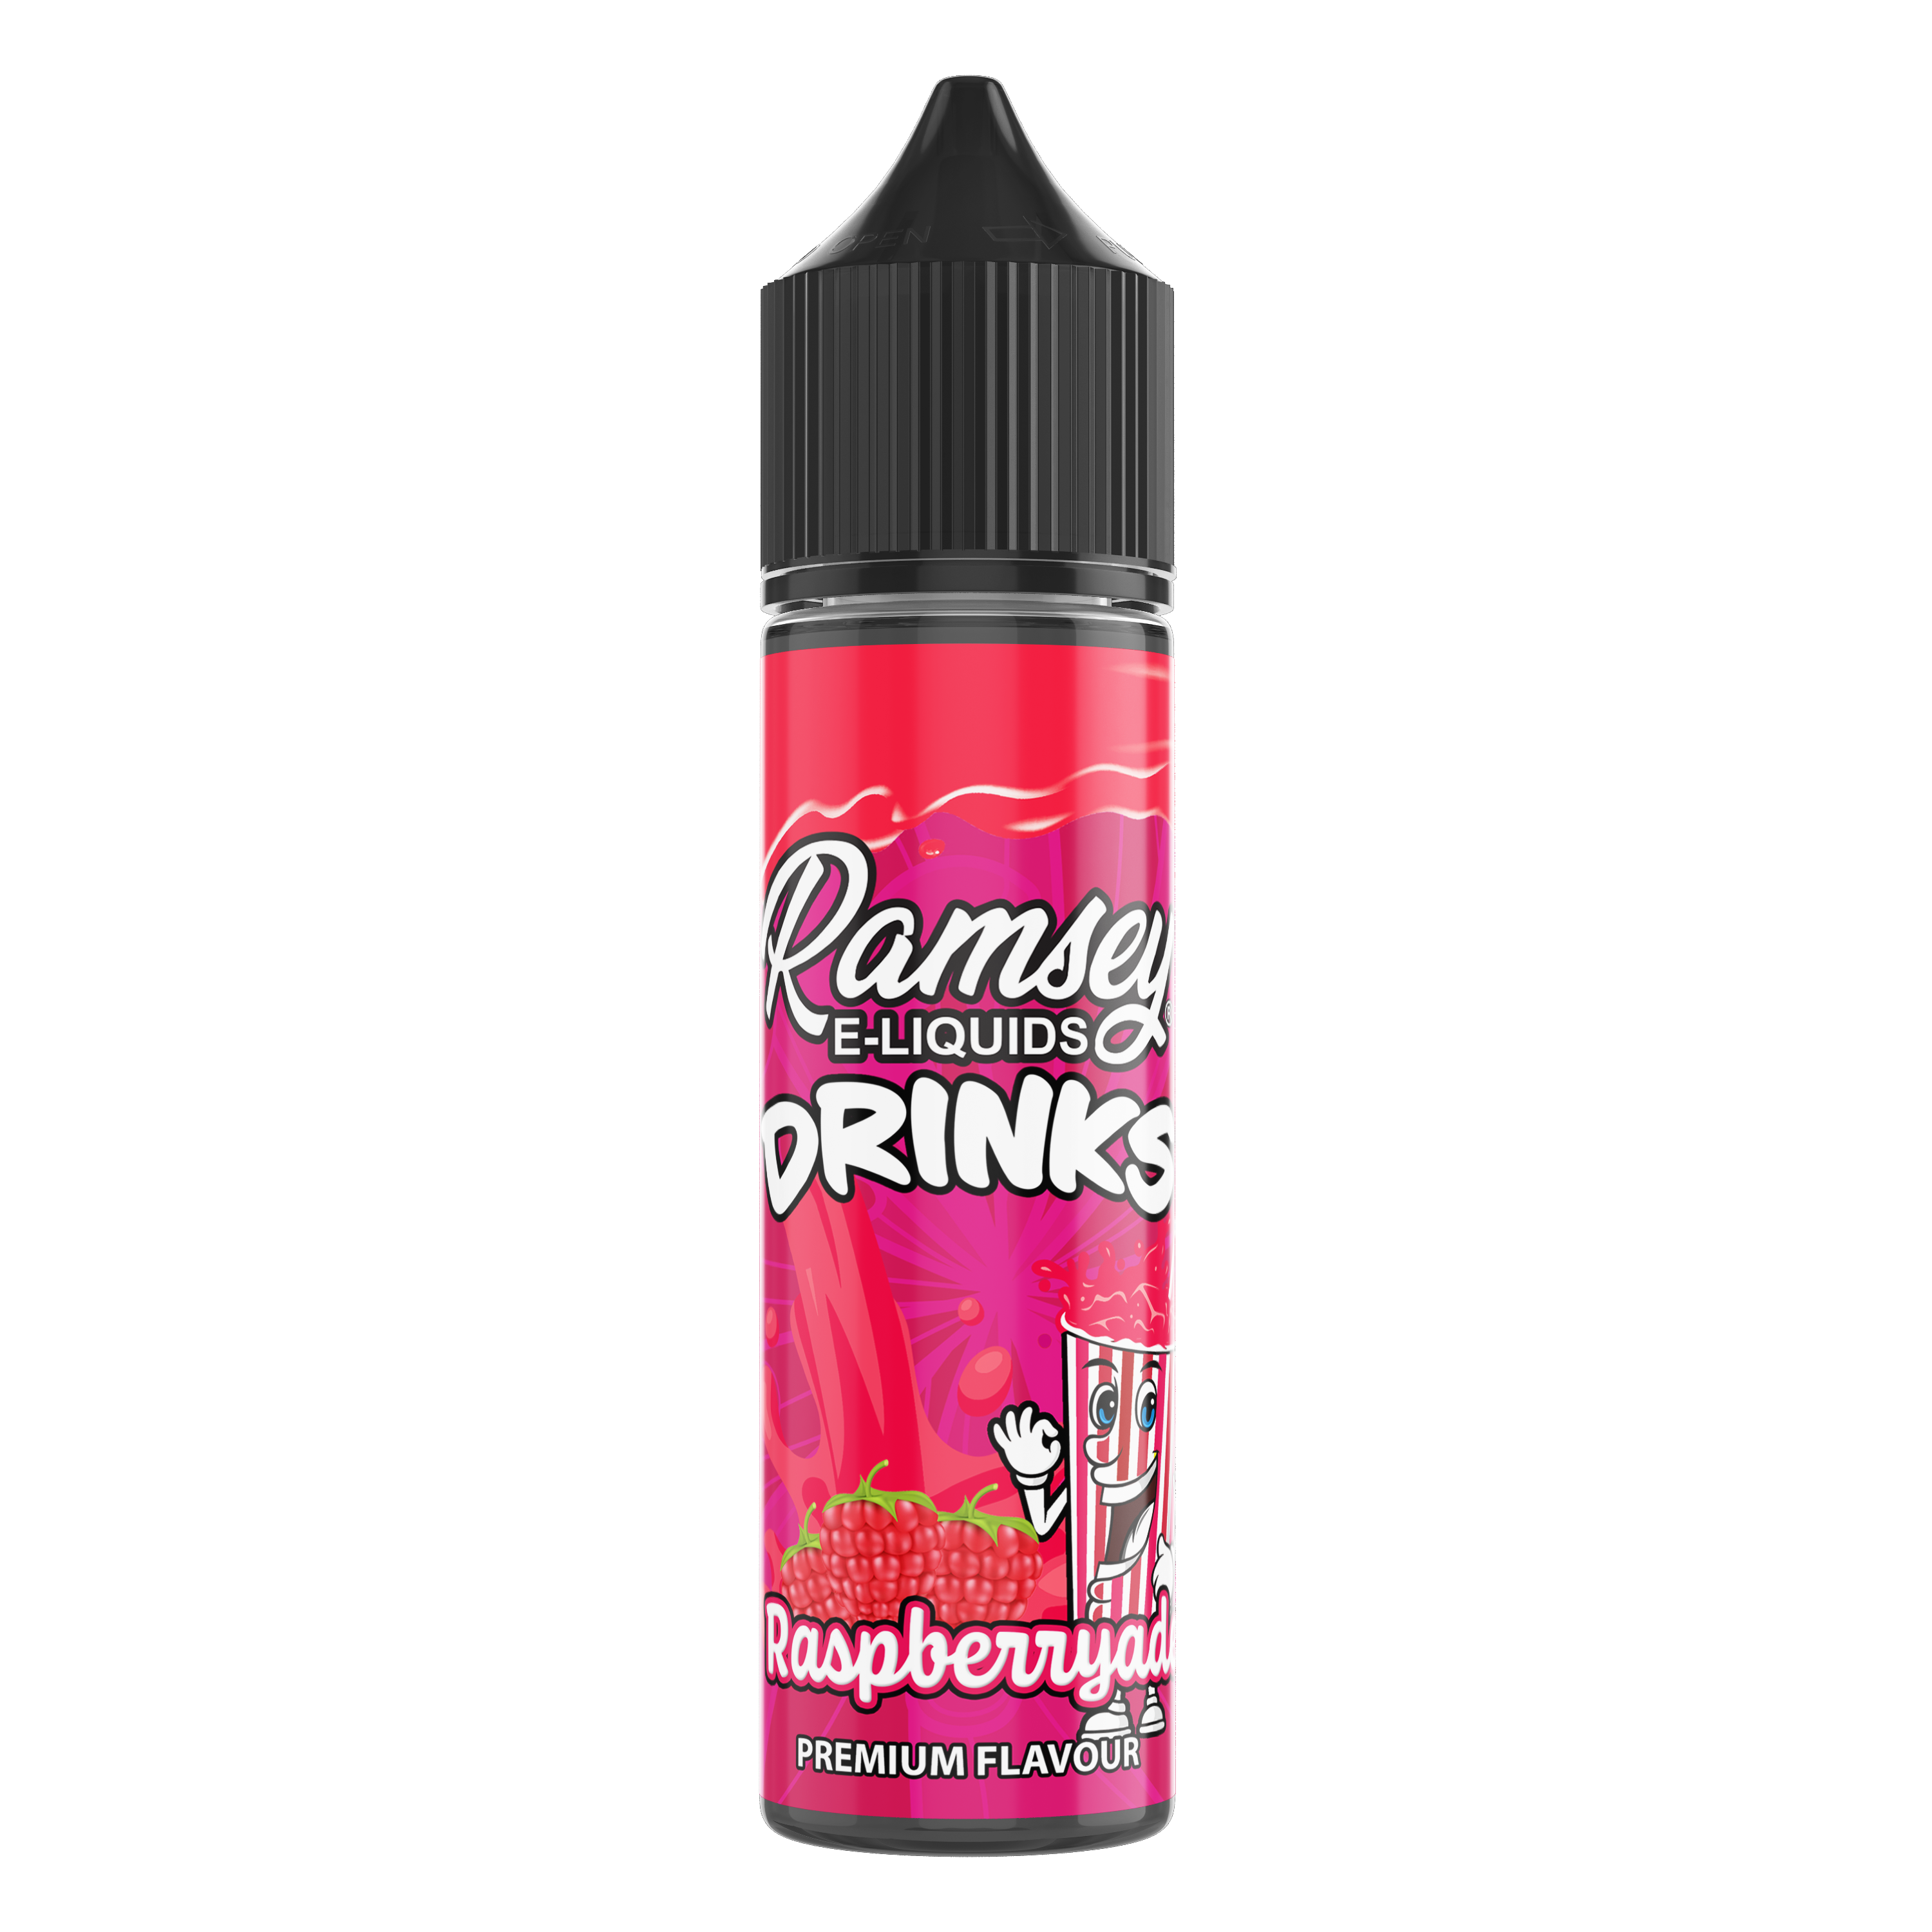 Ramsey E-Liquids Drinks Raspberryade 50ml Shortfill